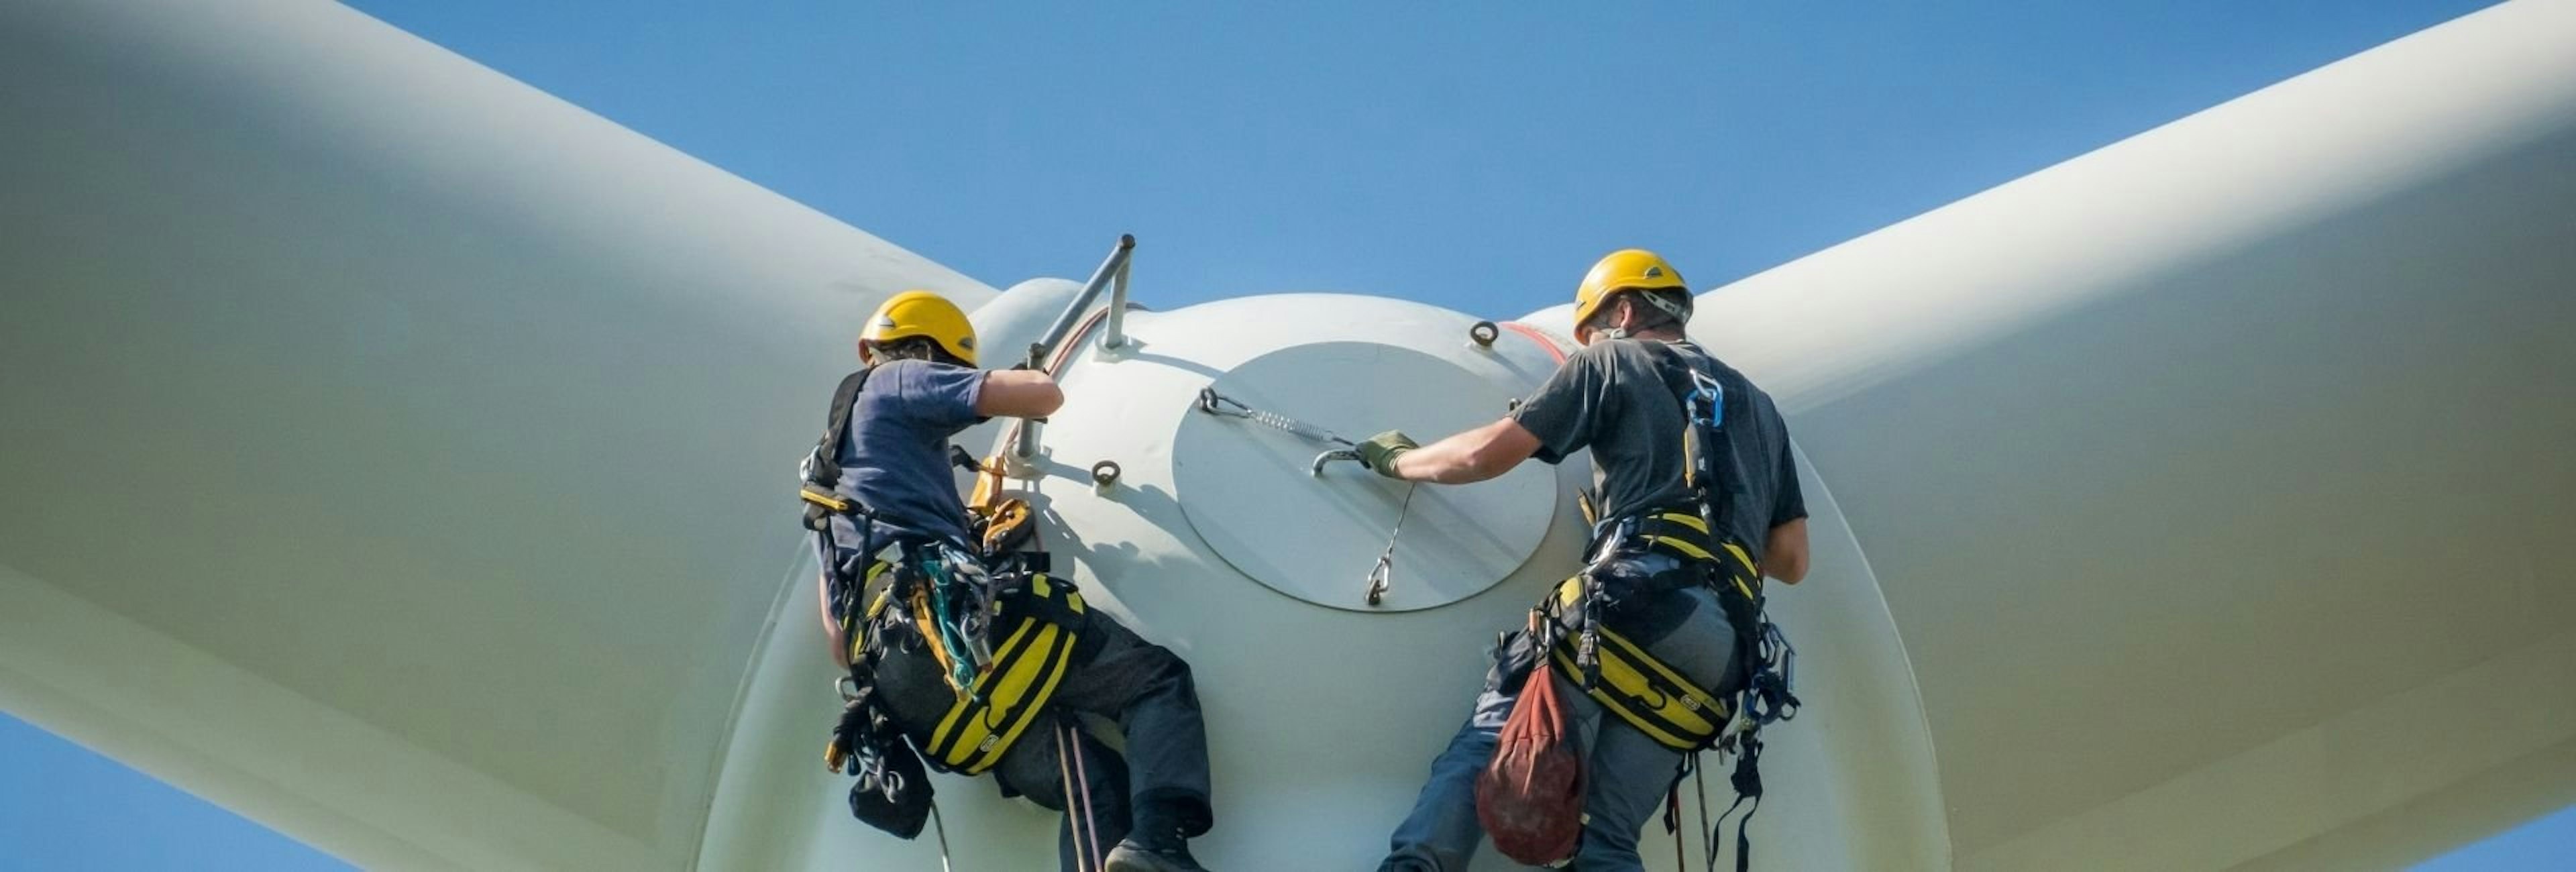 Two wind turbine technicians working on a turbine